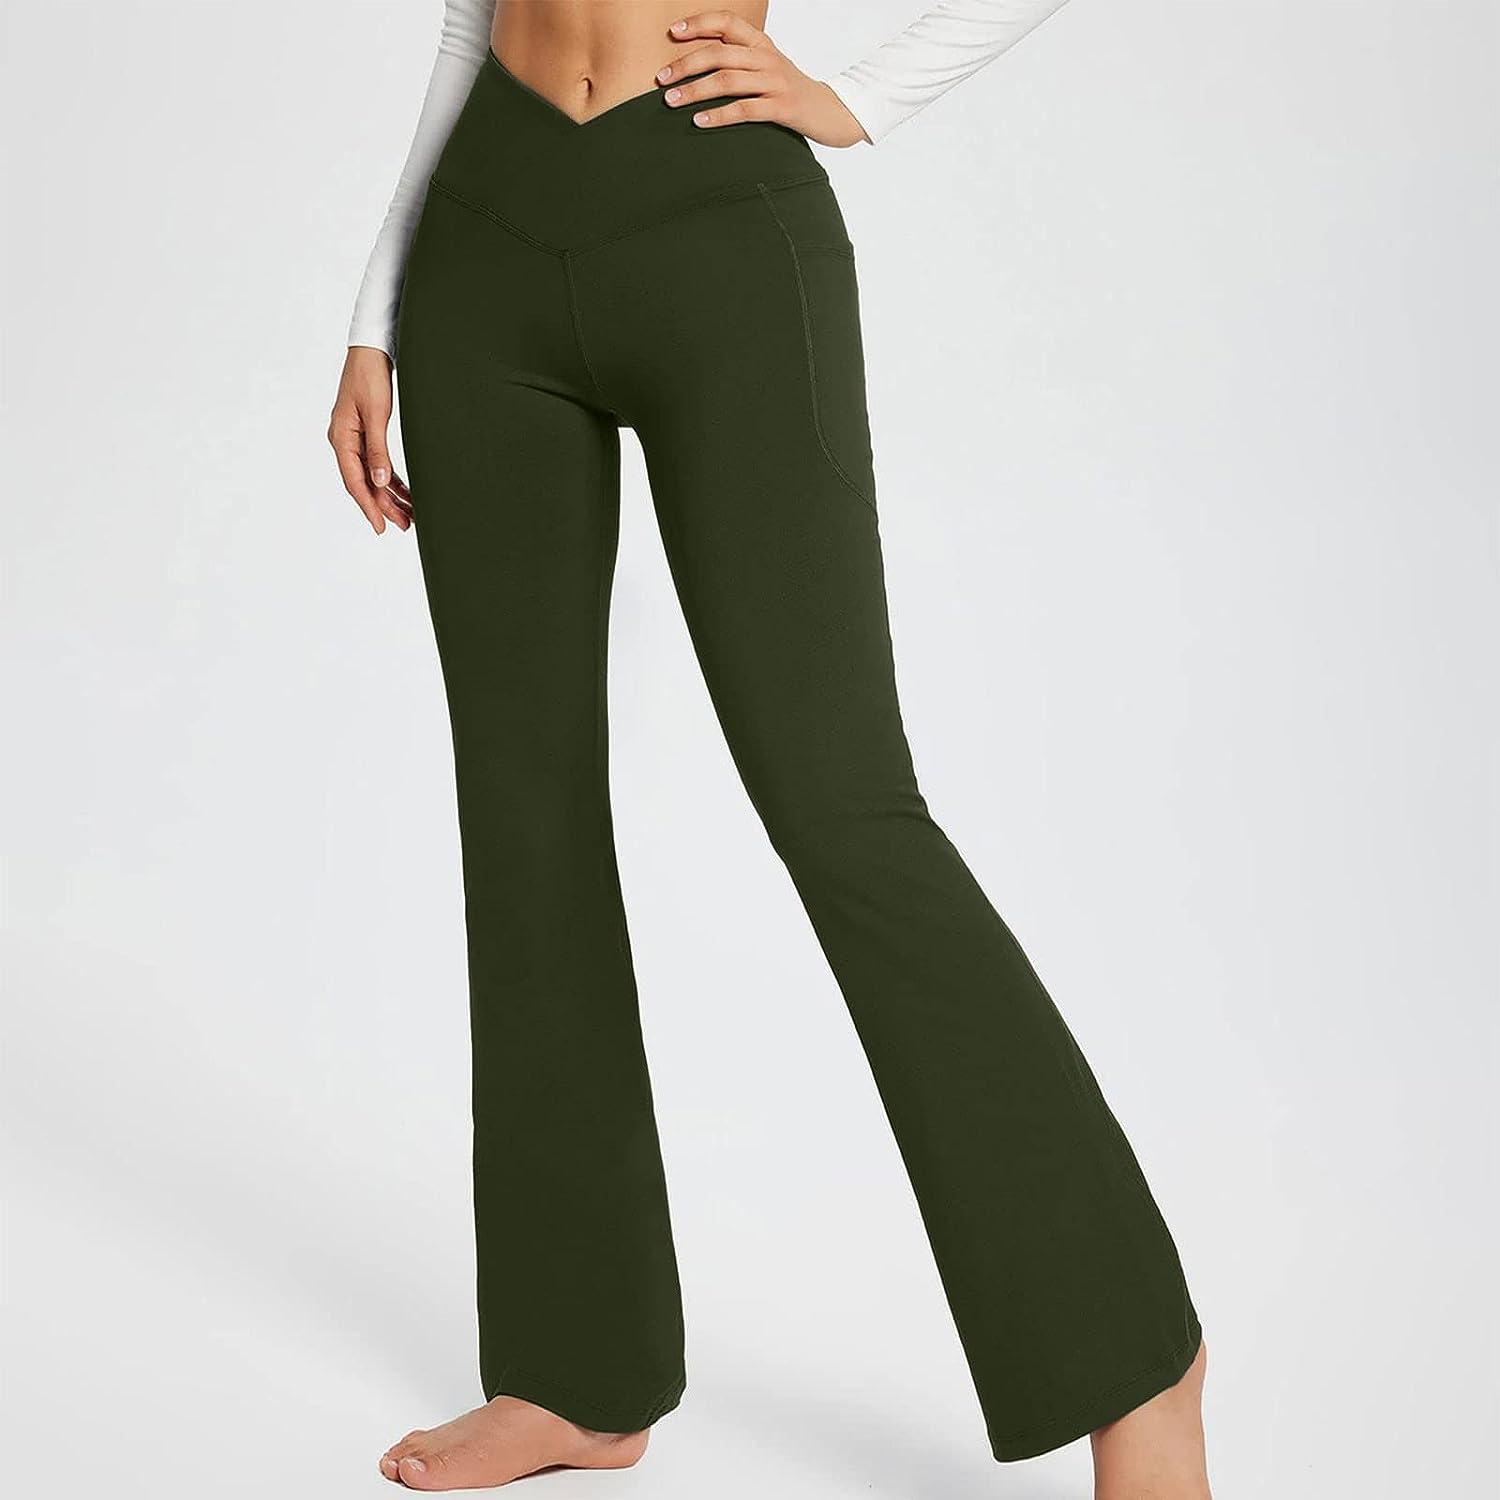 GAIAM Green Yoga Pants Size M - 60% off